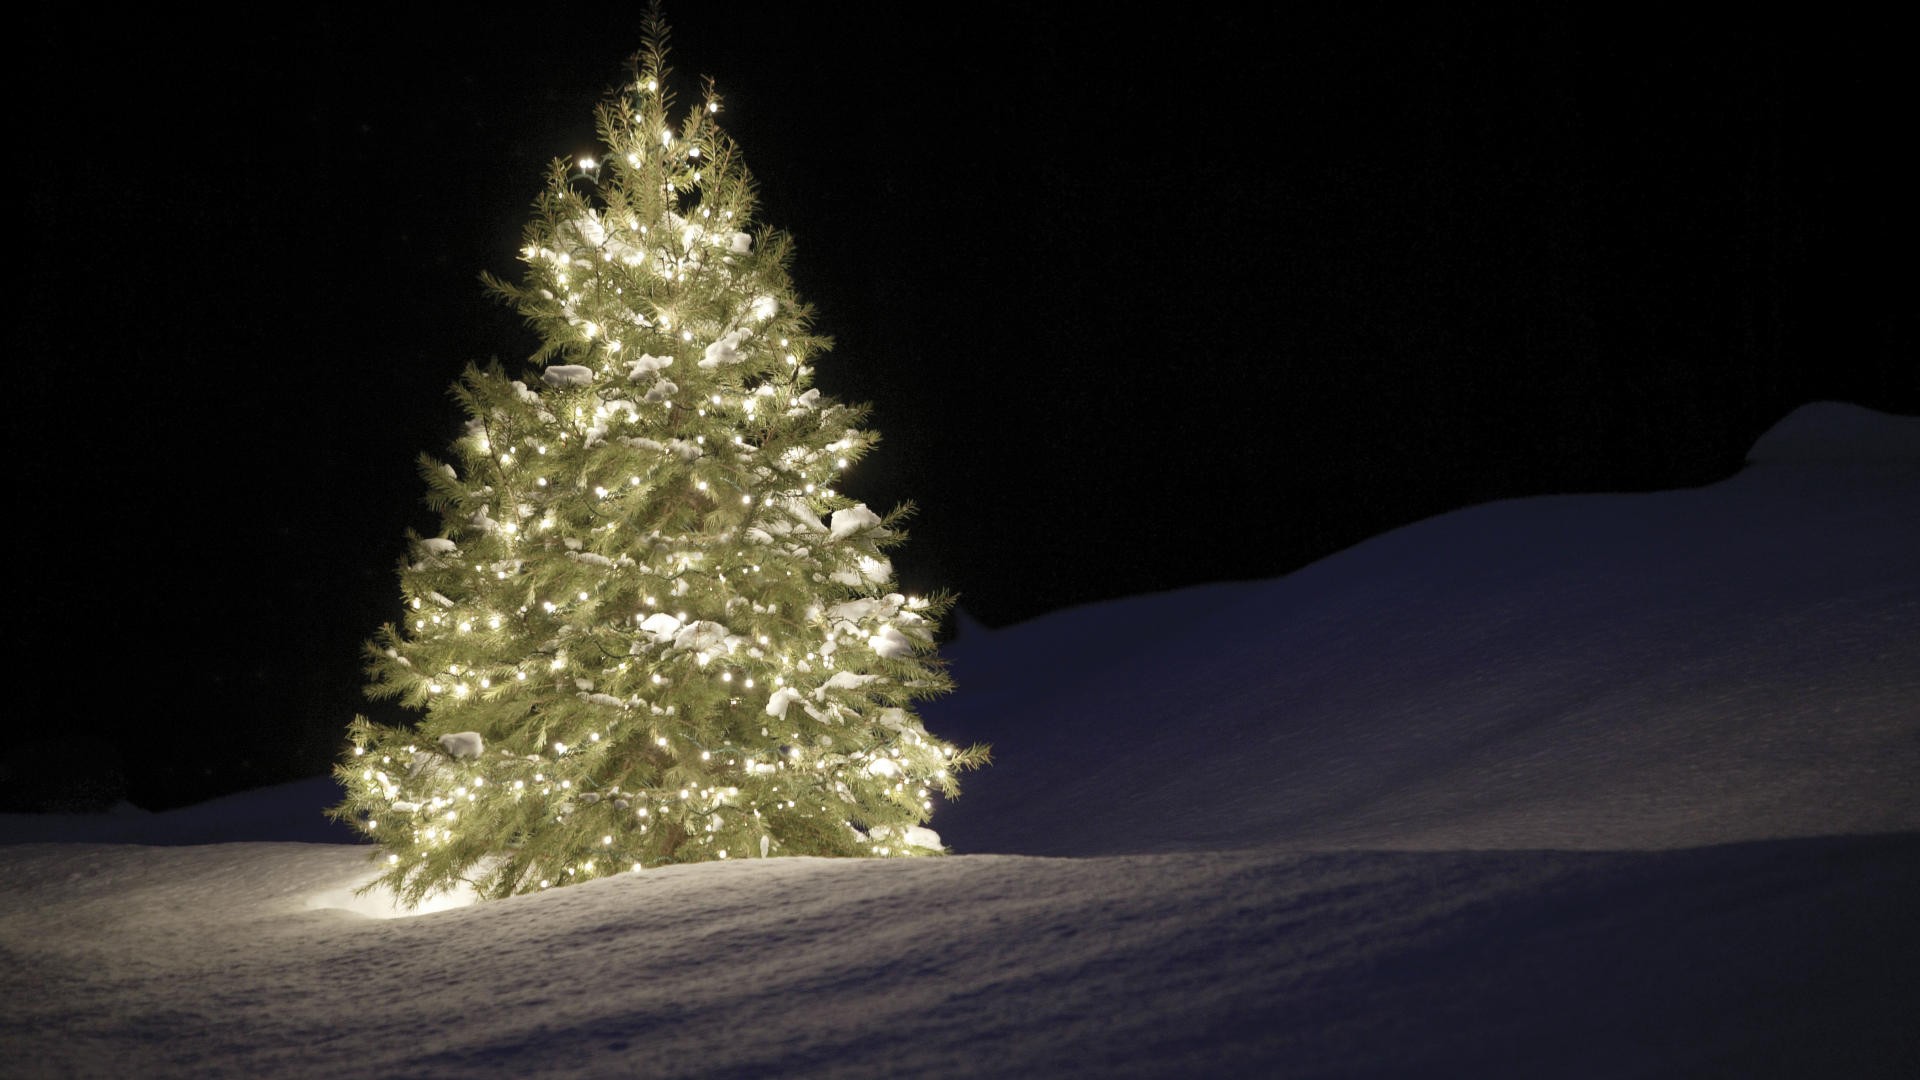 night, Christmas trees, silent - desktop wallpaper